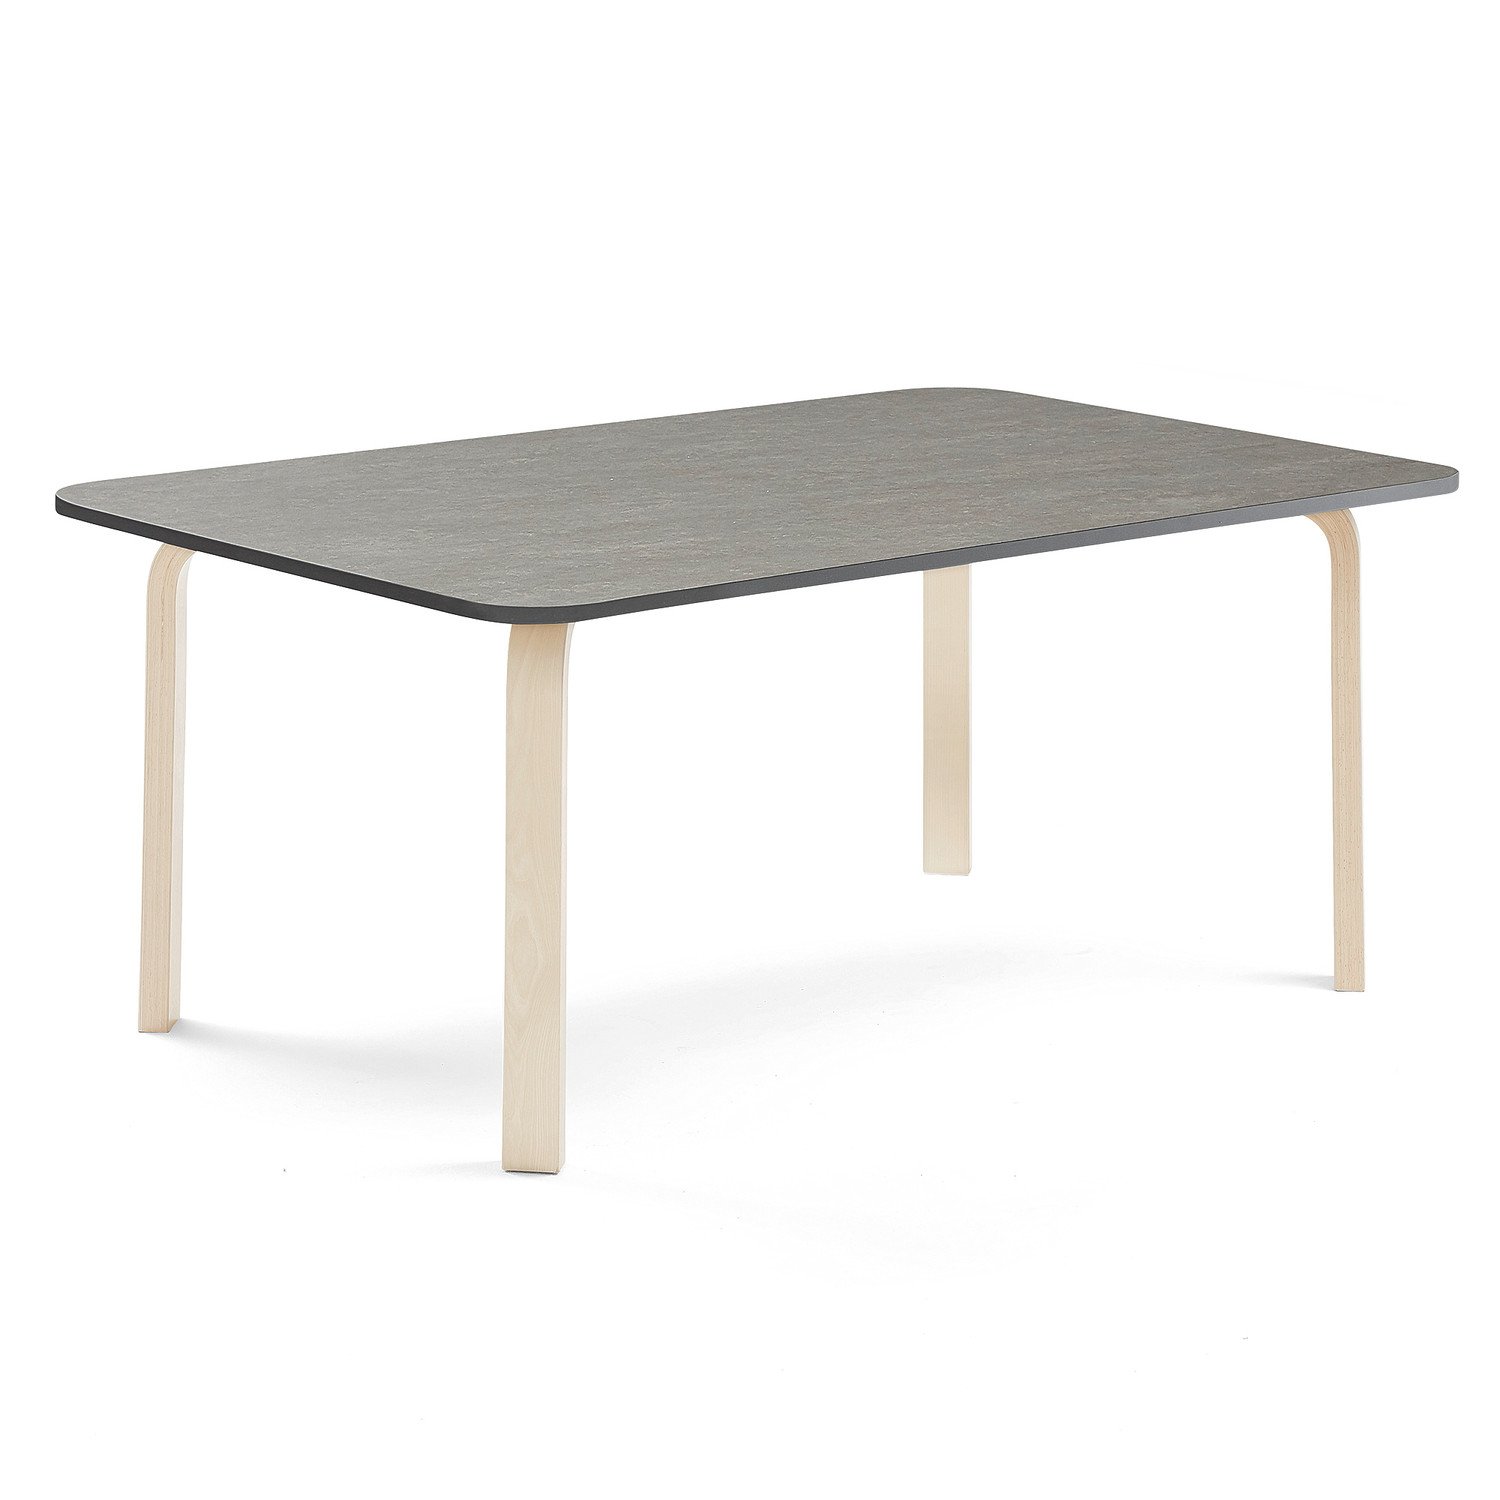 Stůl ELTON, 1800x800x590 mm, bříza, akustické linoleum, tmavě šedá